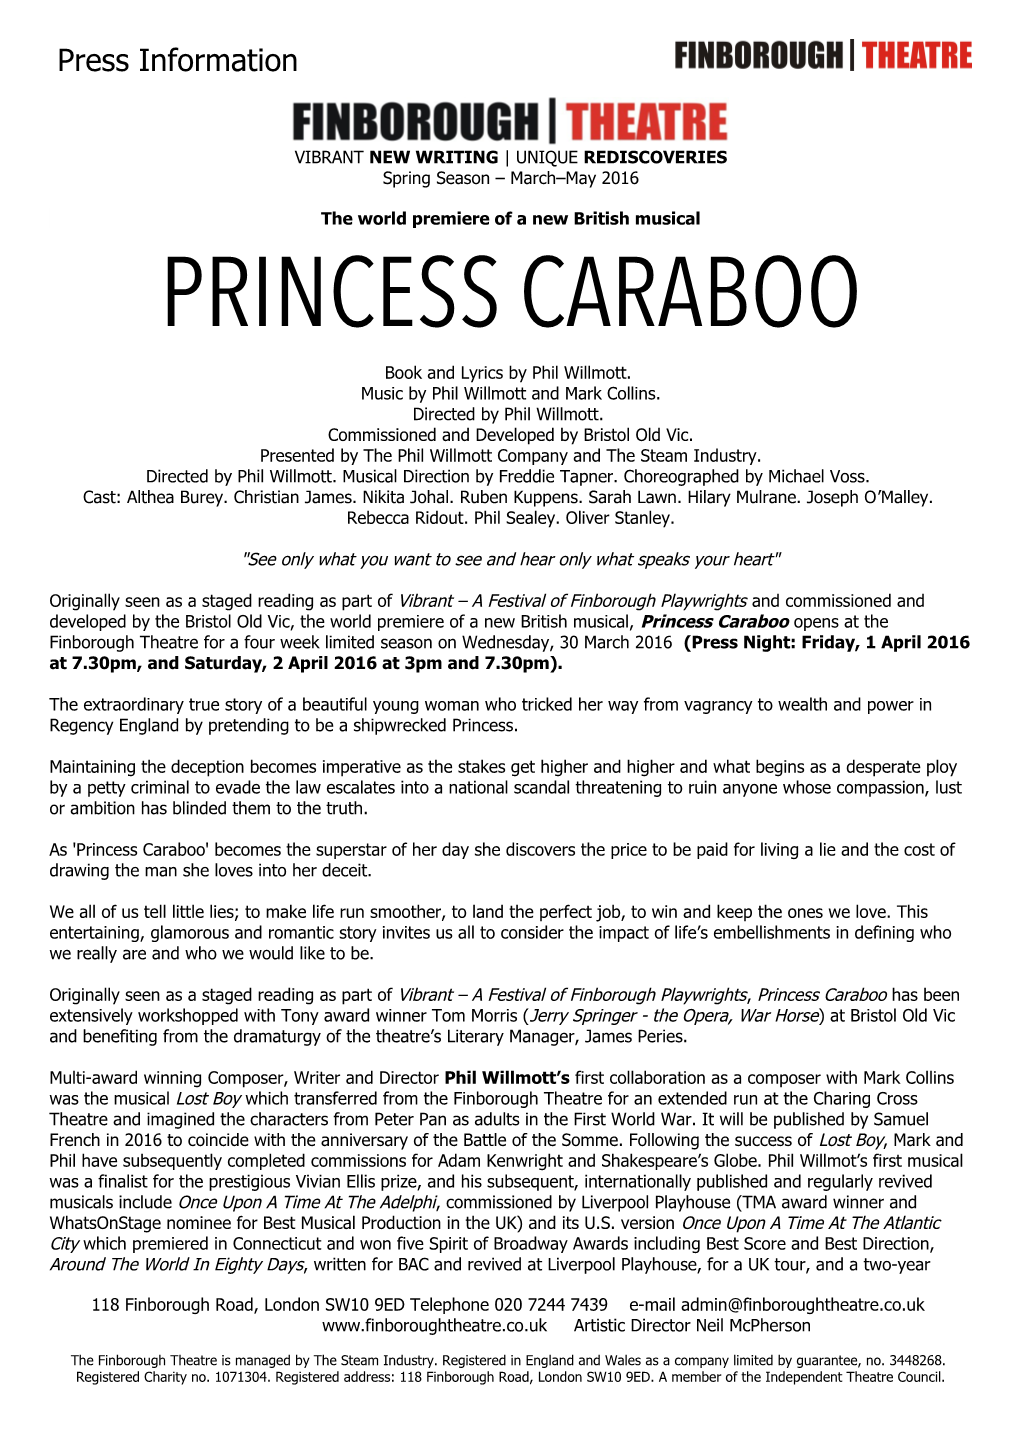 PRINCESS CARABOO Book and Lyrics by Phil Willmott